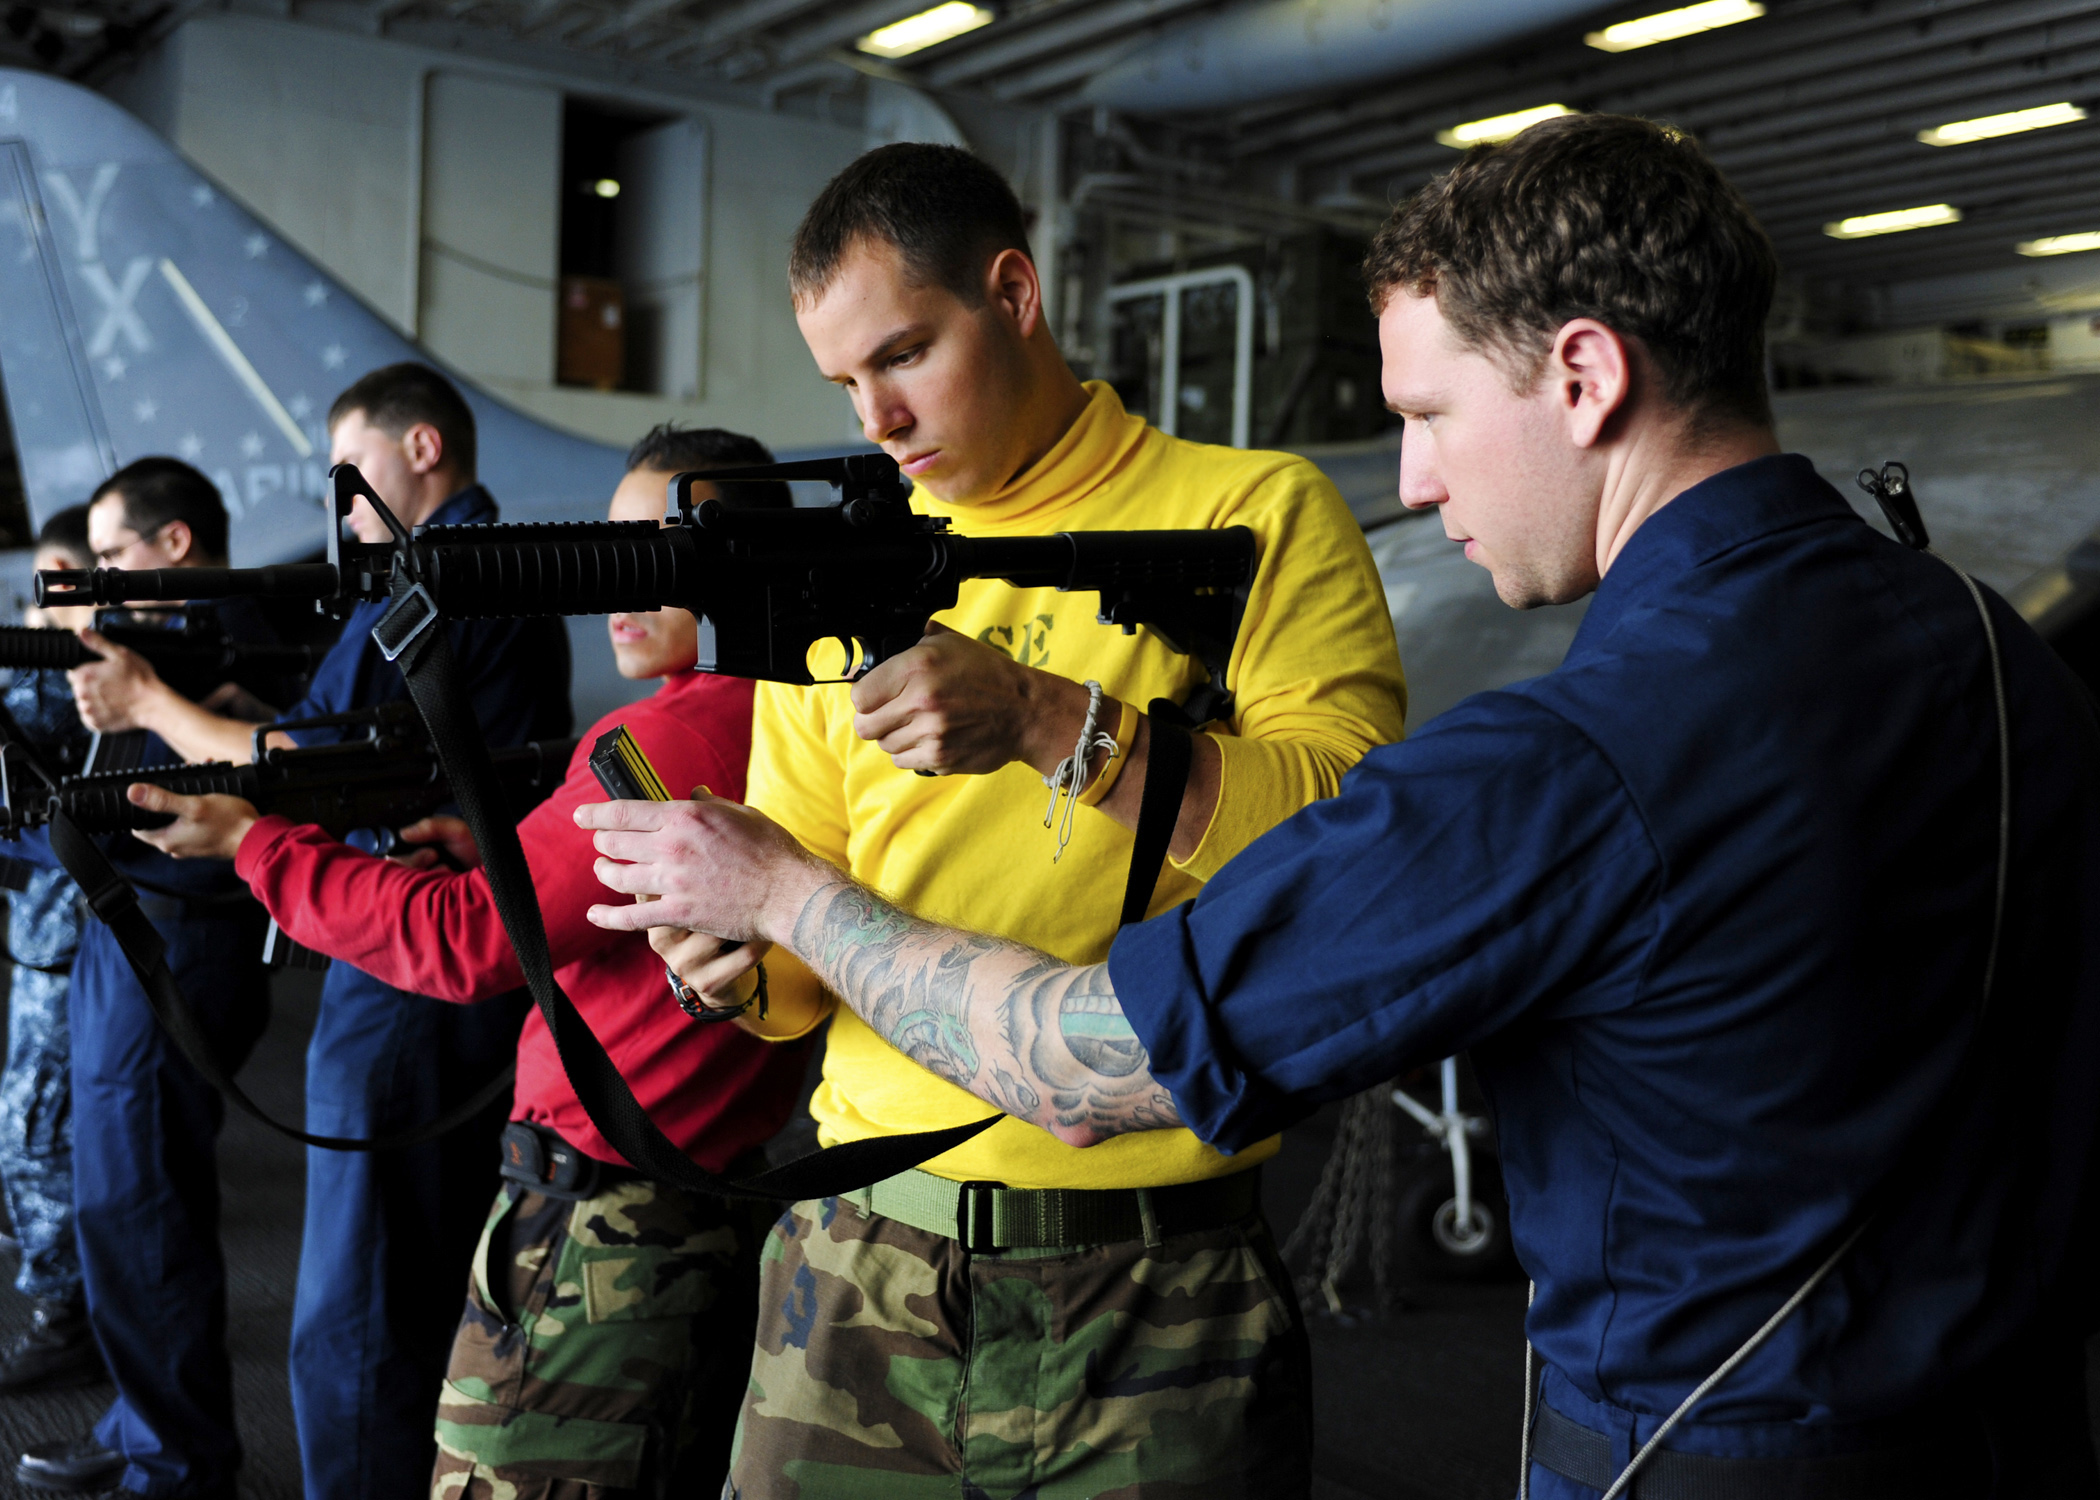 two men in uniforms are holding a machine gun